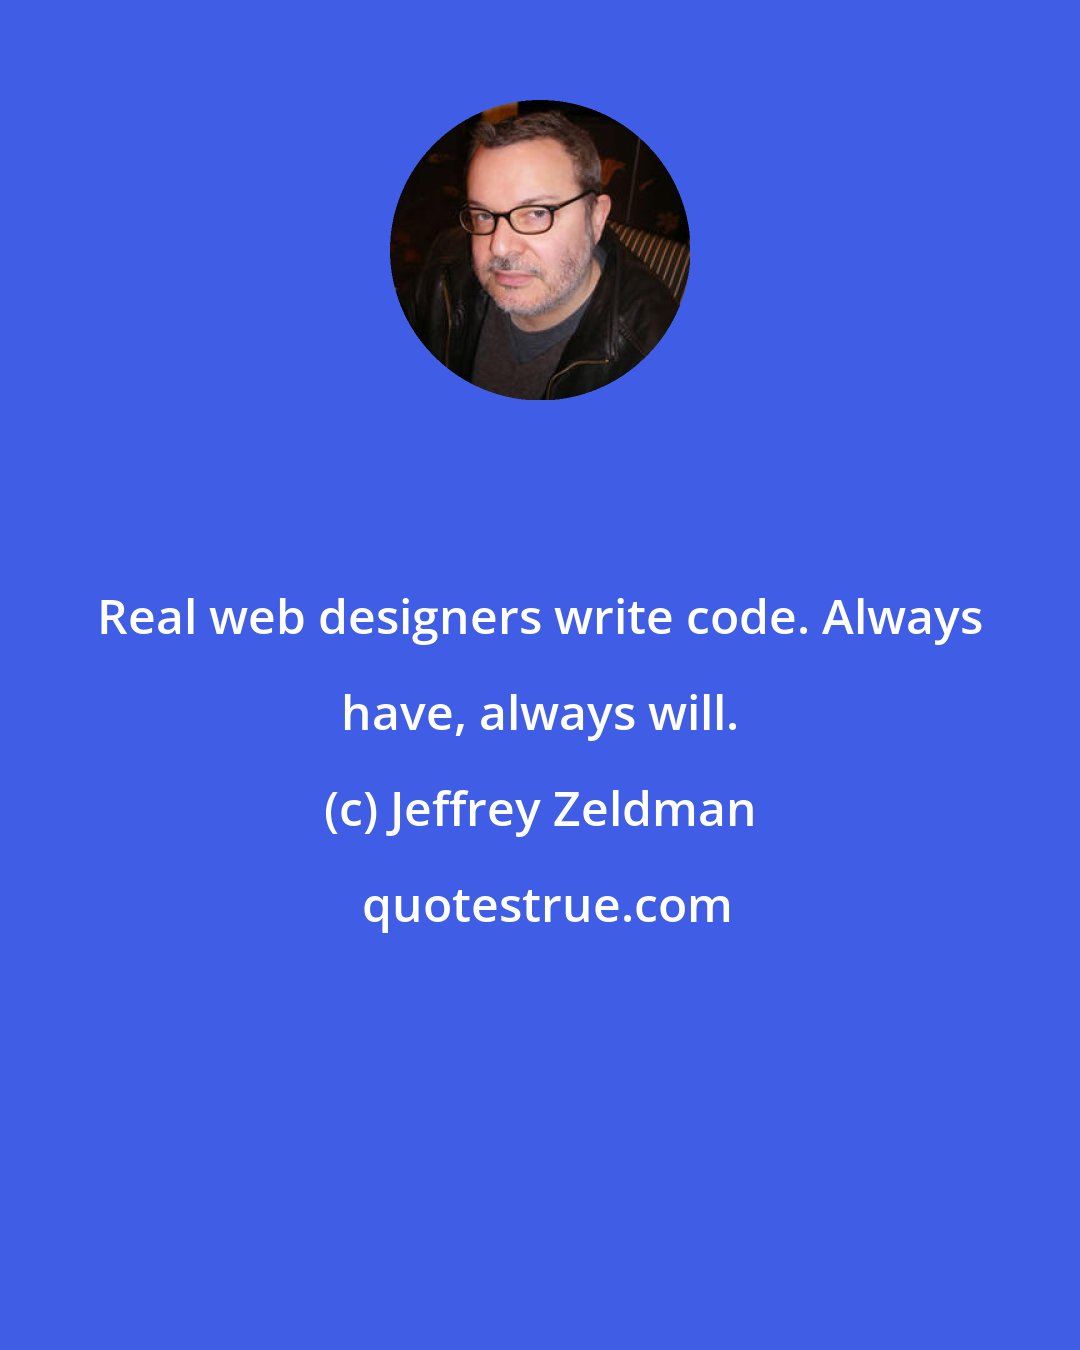 Jeffrey Zeldman: Real web designers write code. Always have, always will.